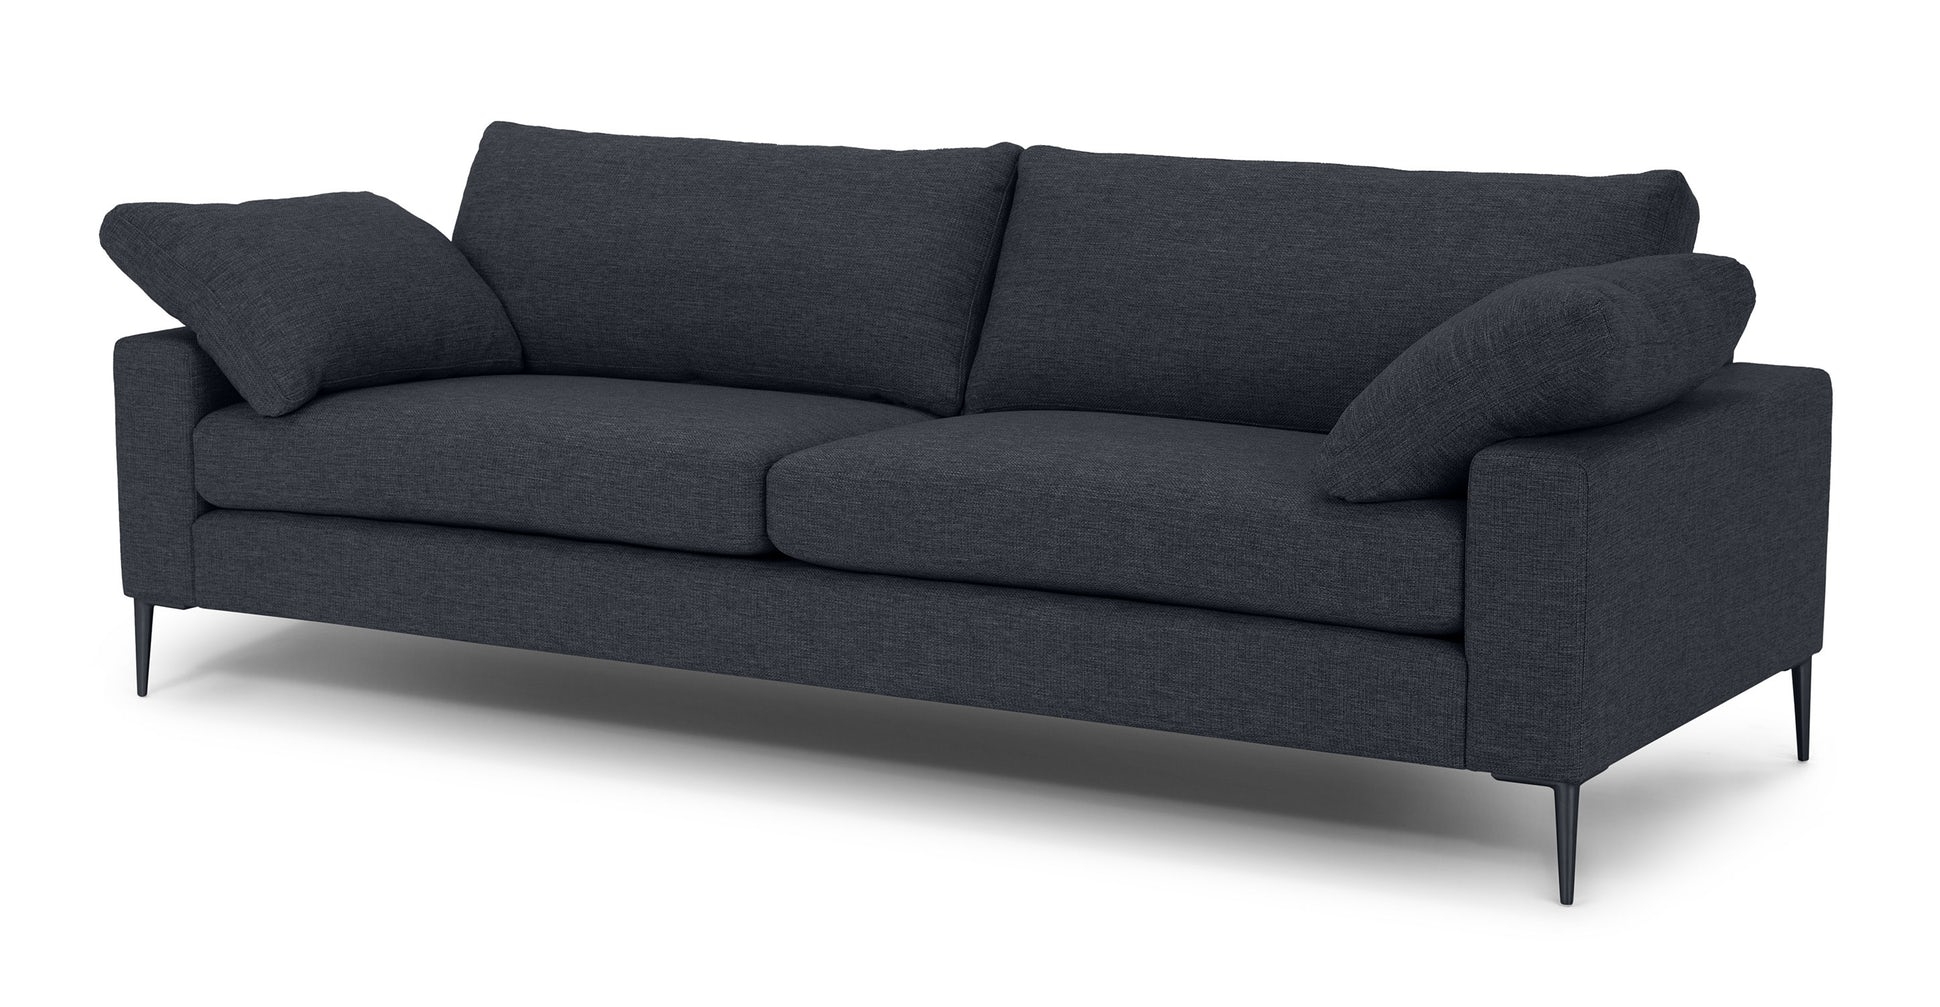 Nova Bard Gray Sofa, Black Legs - Image 1